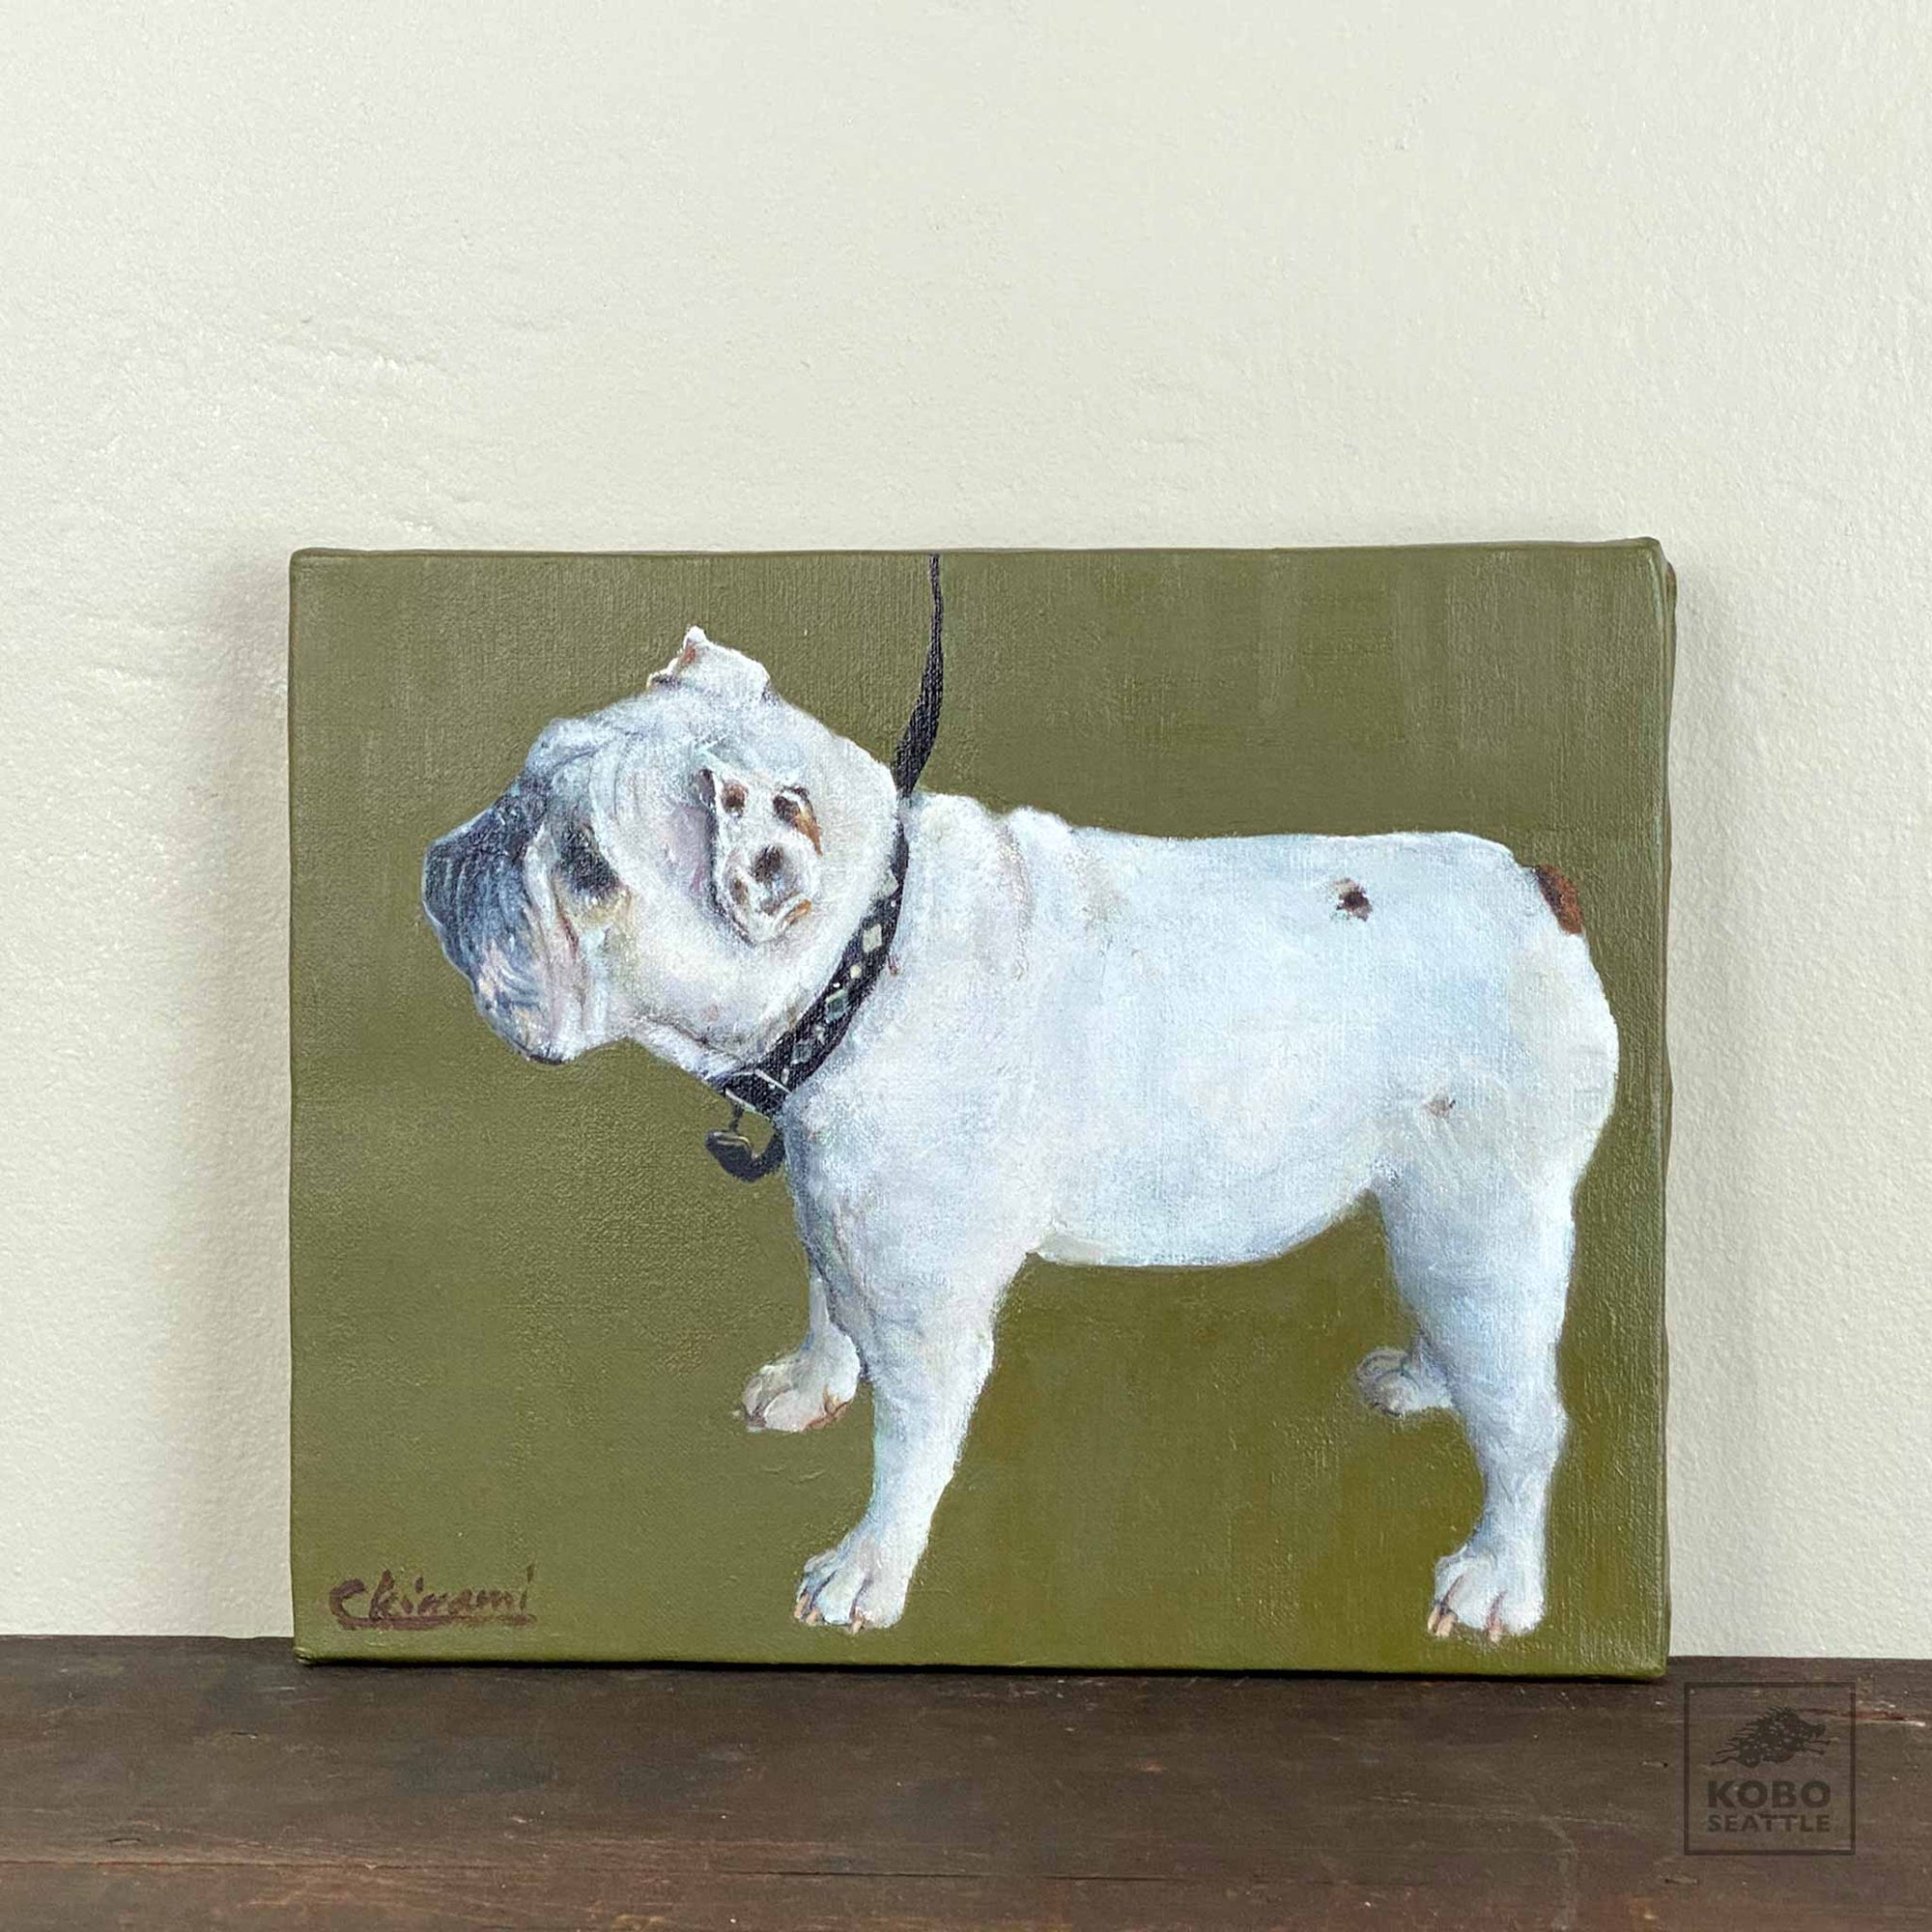 Oil on canvas from Chinami Kono - Bulldog